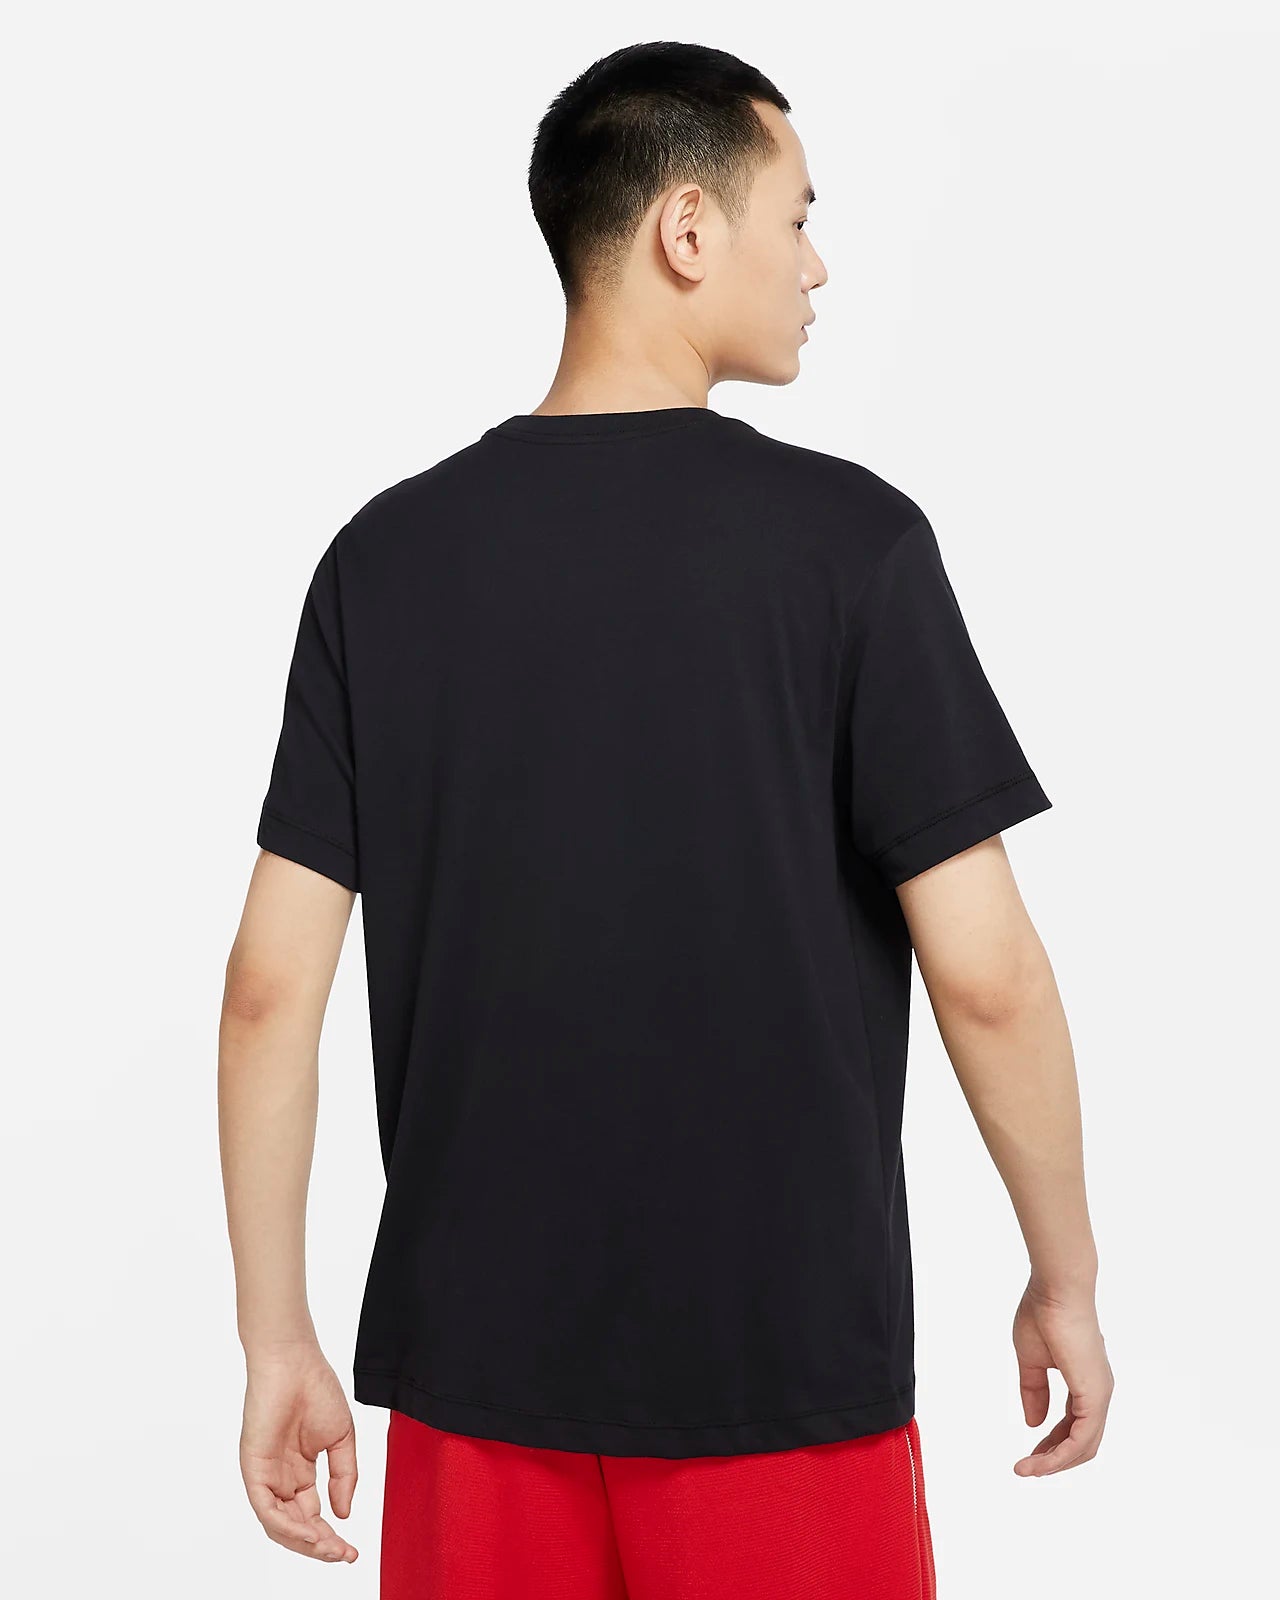 Nike Dri-FIT
Men's 'Just Do It' Basketball T-Shirt -dr7640-010